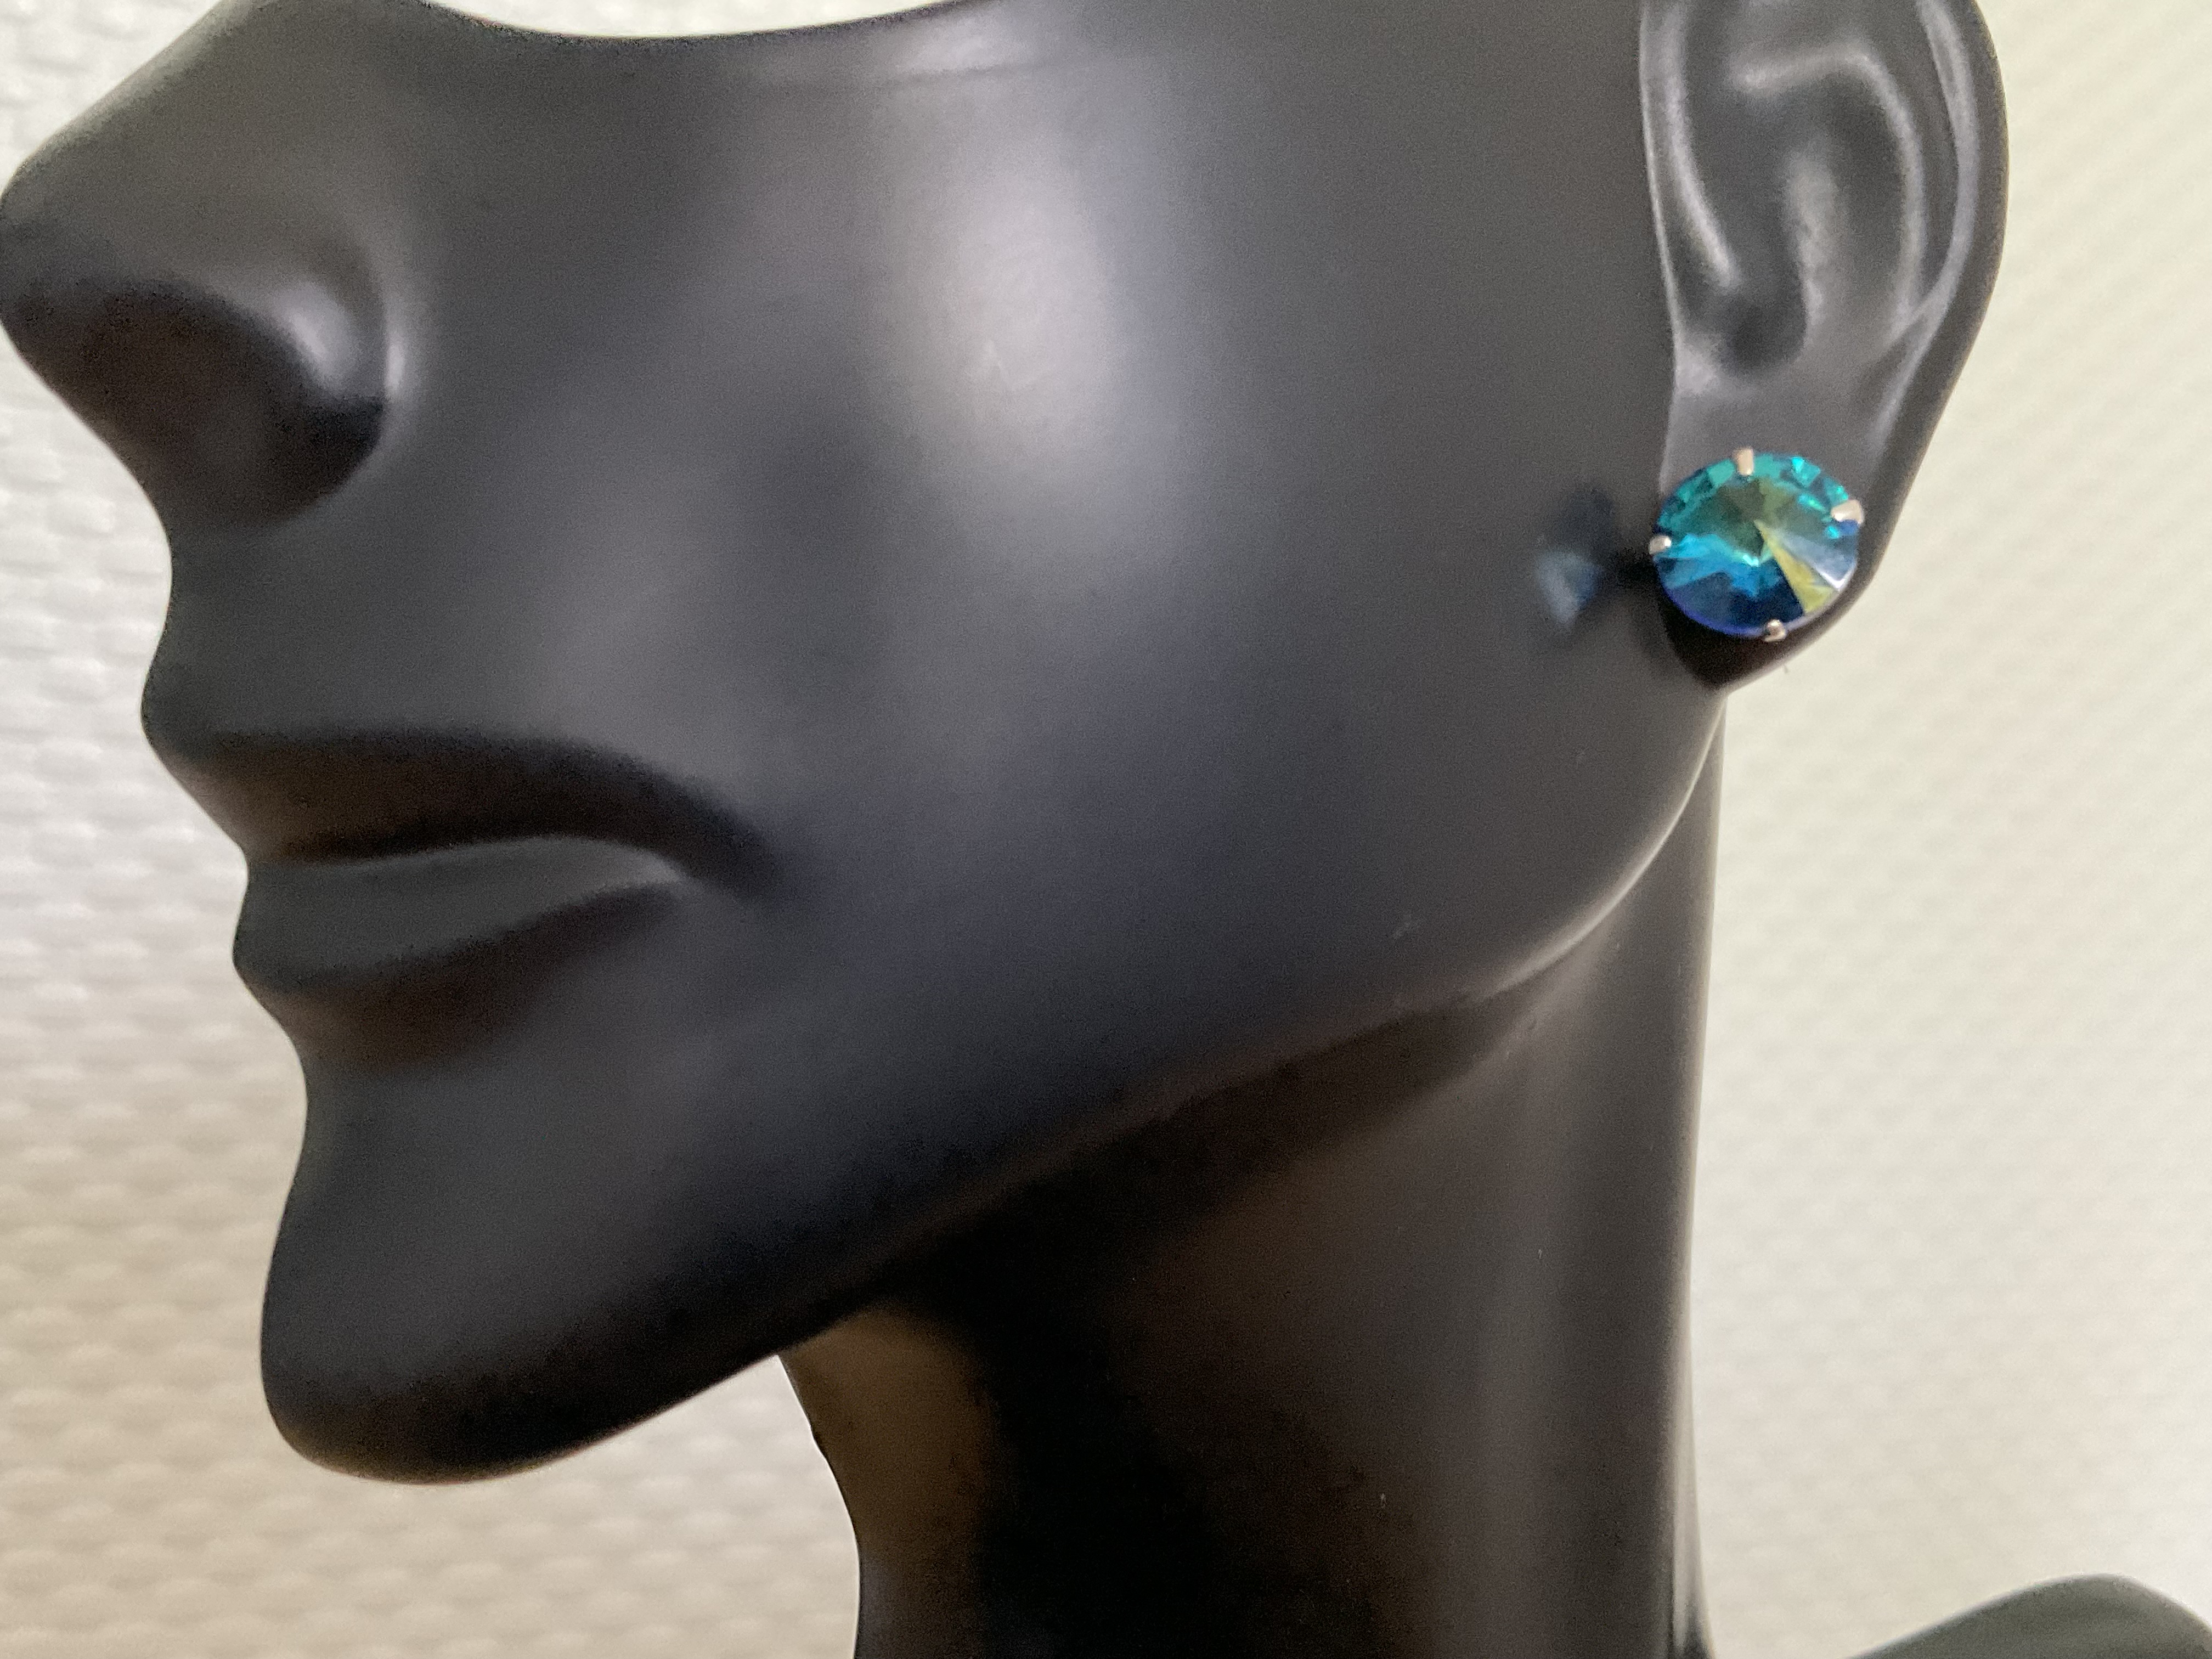 Blue Swarovski Crystal Stud Earrings